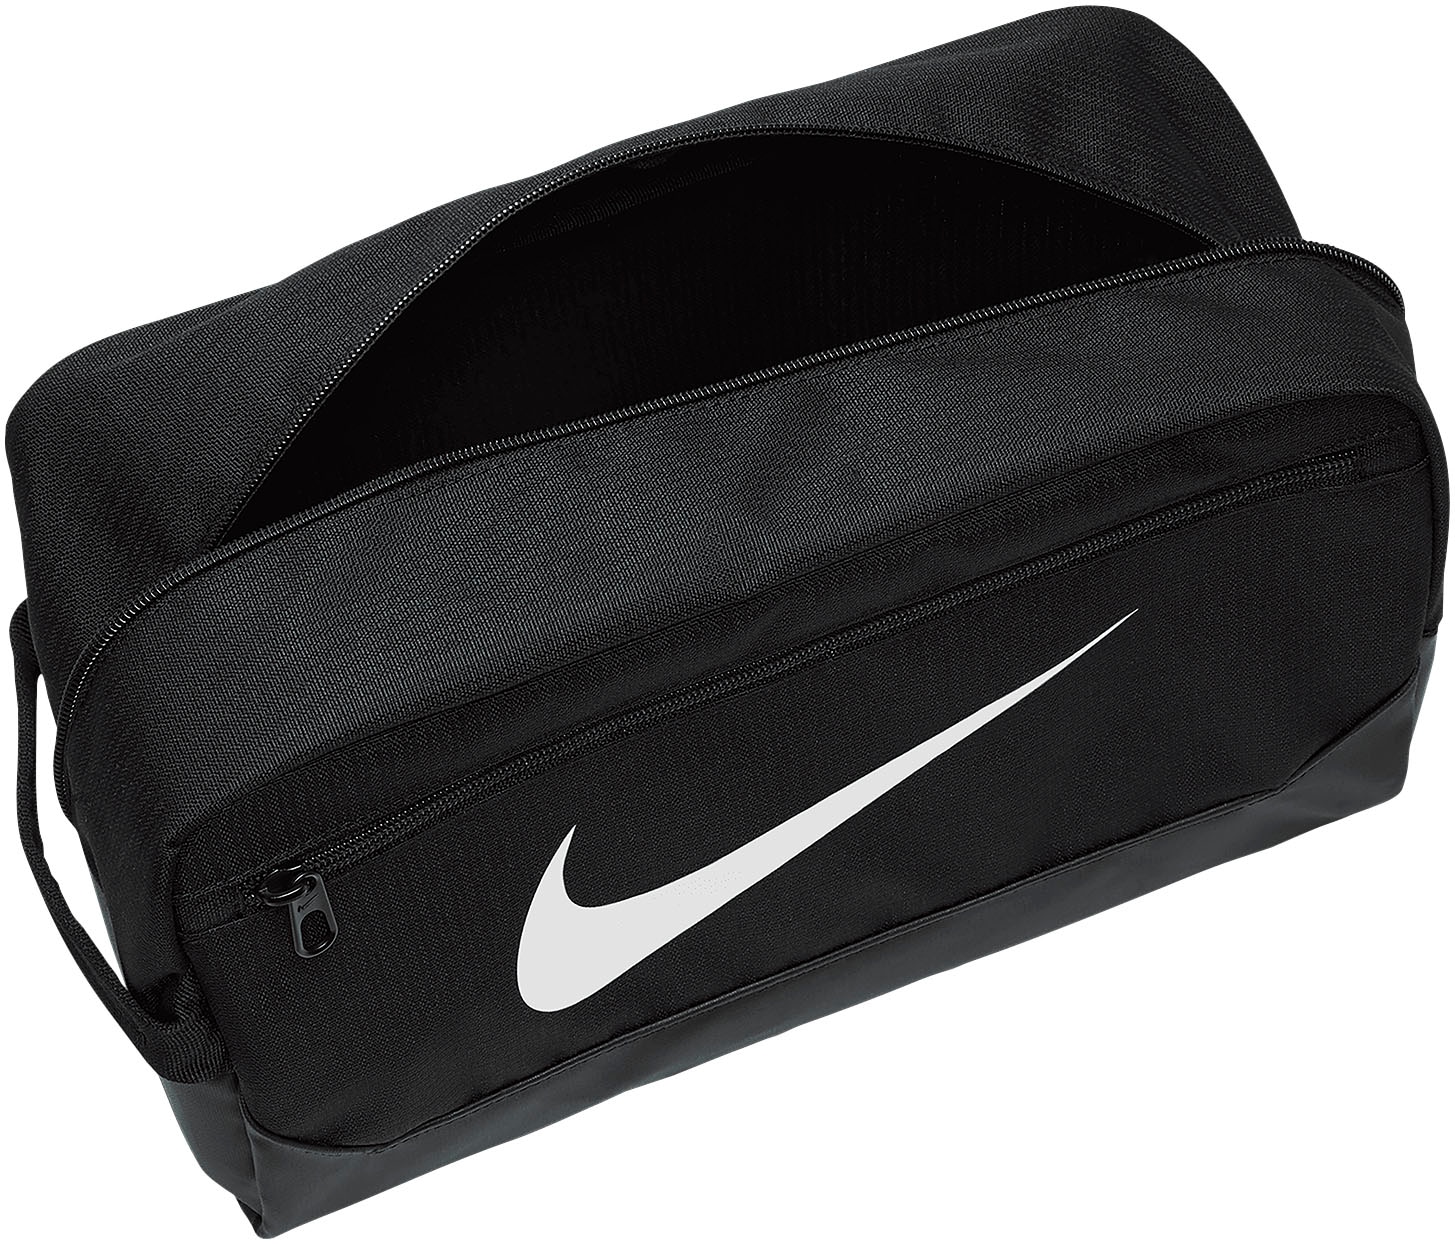 Nike Sporttasche »BRASILIA . TRAINING SHOE«